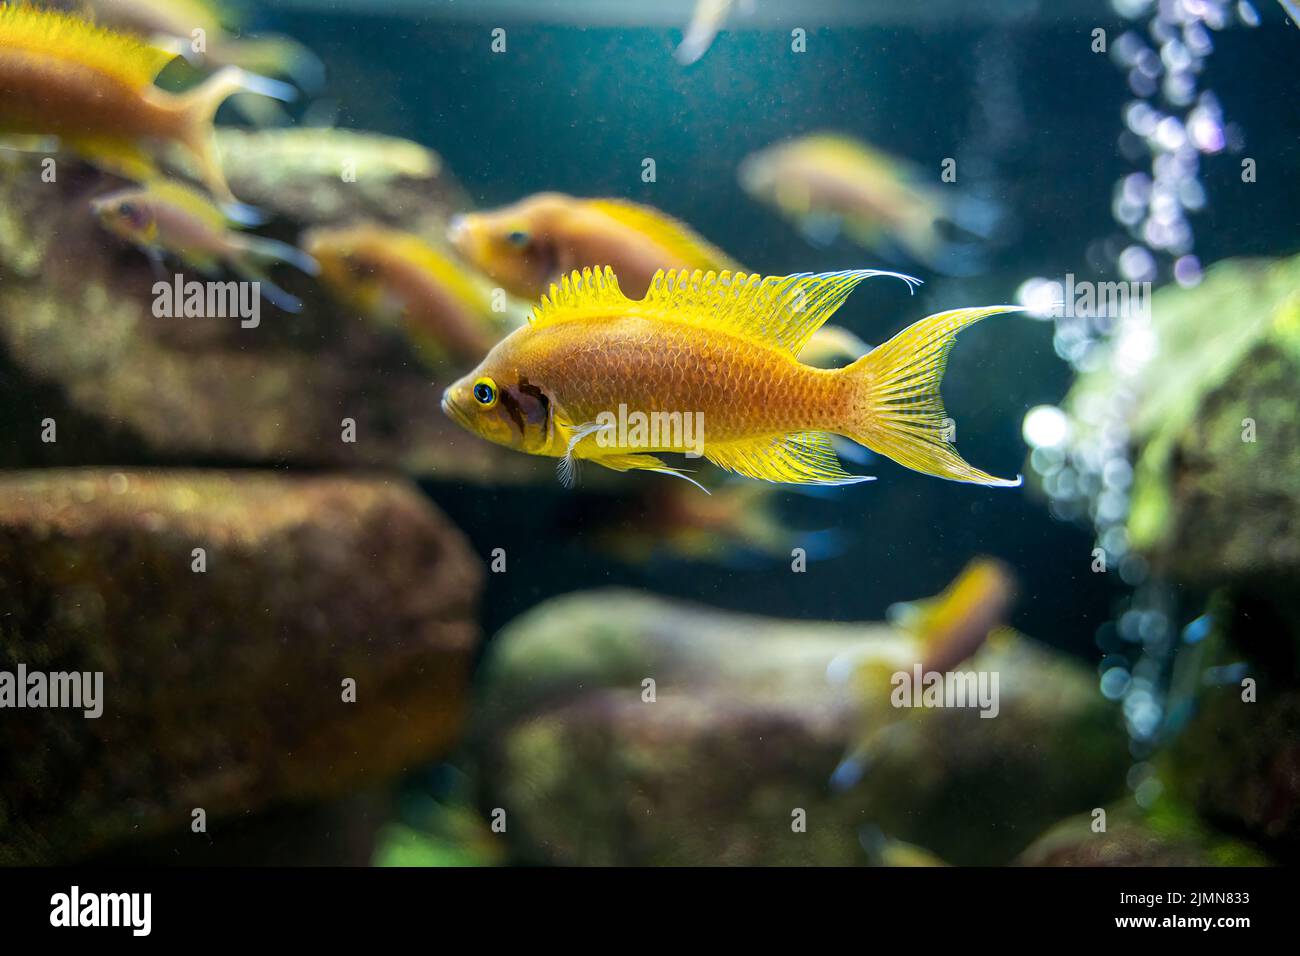 Neolamprologus pulcher fish Tropical aquarium fish swimming underwater, marine life concept Stock Photo